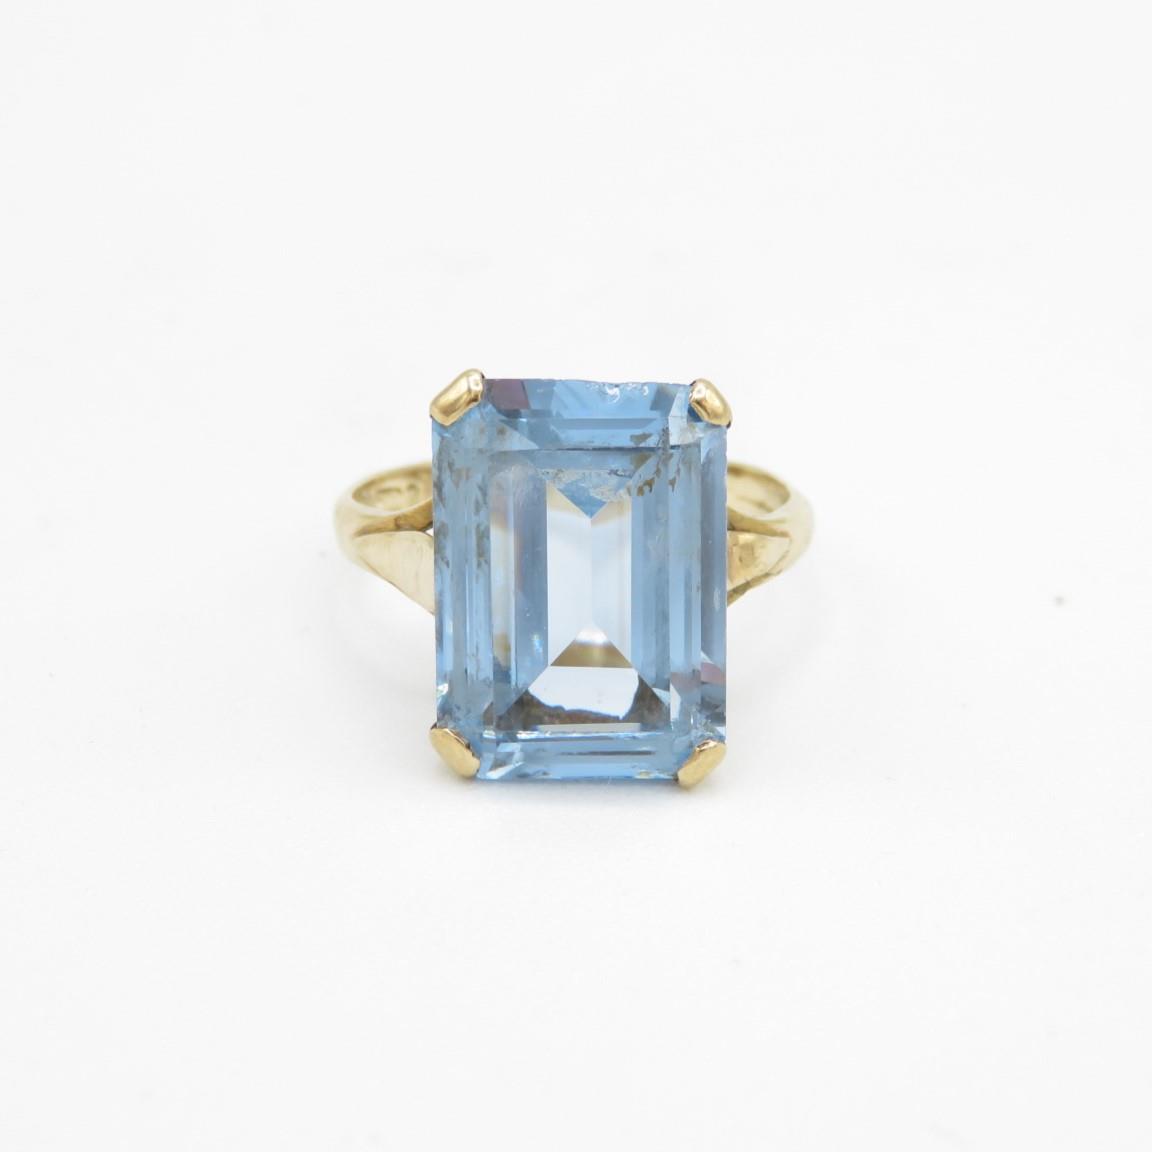 9ct gold emerald cut blue gemstone dress ring Size L 1/2 - 3.2 g